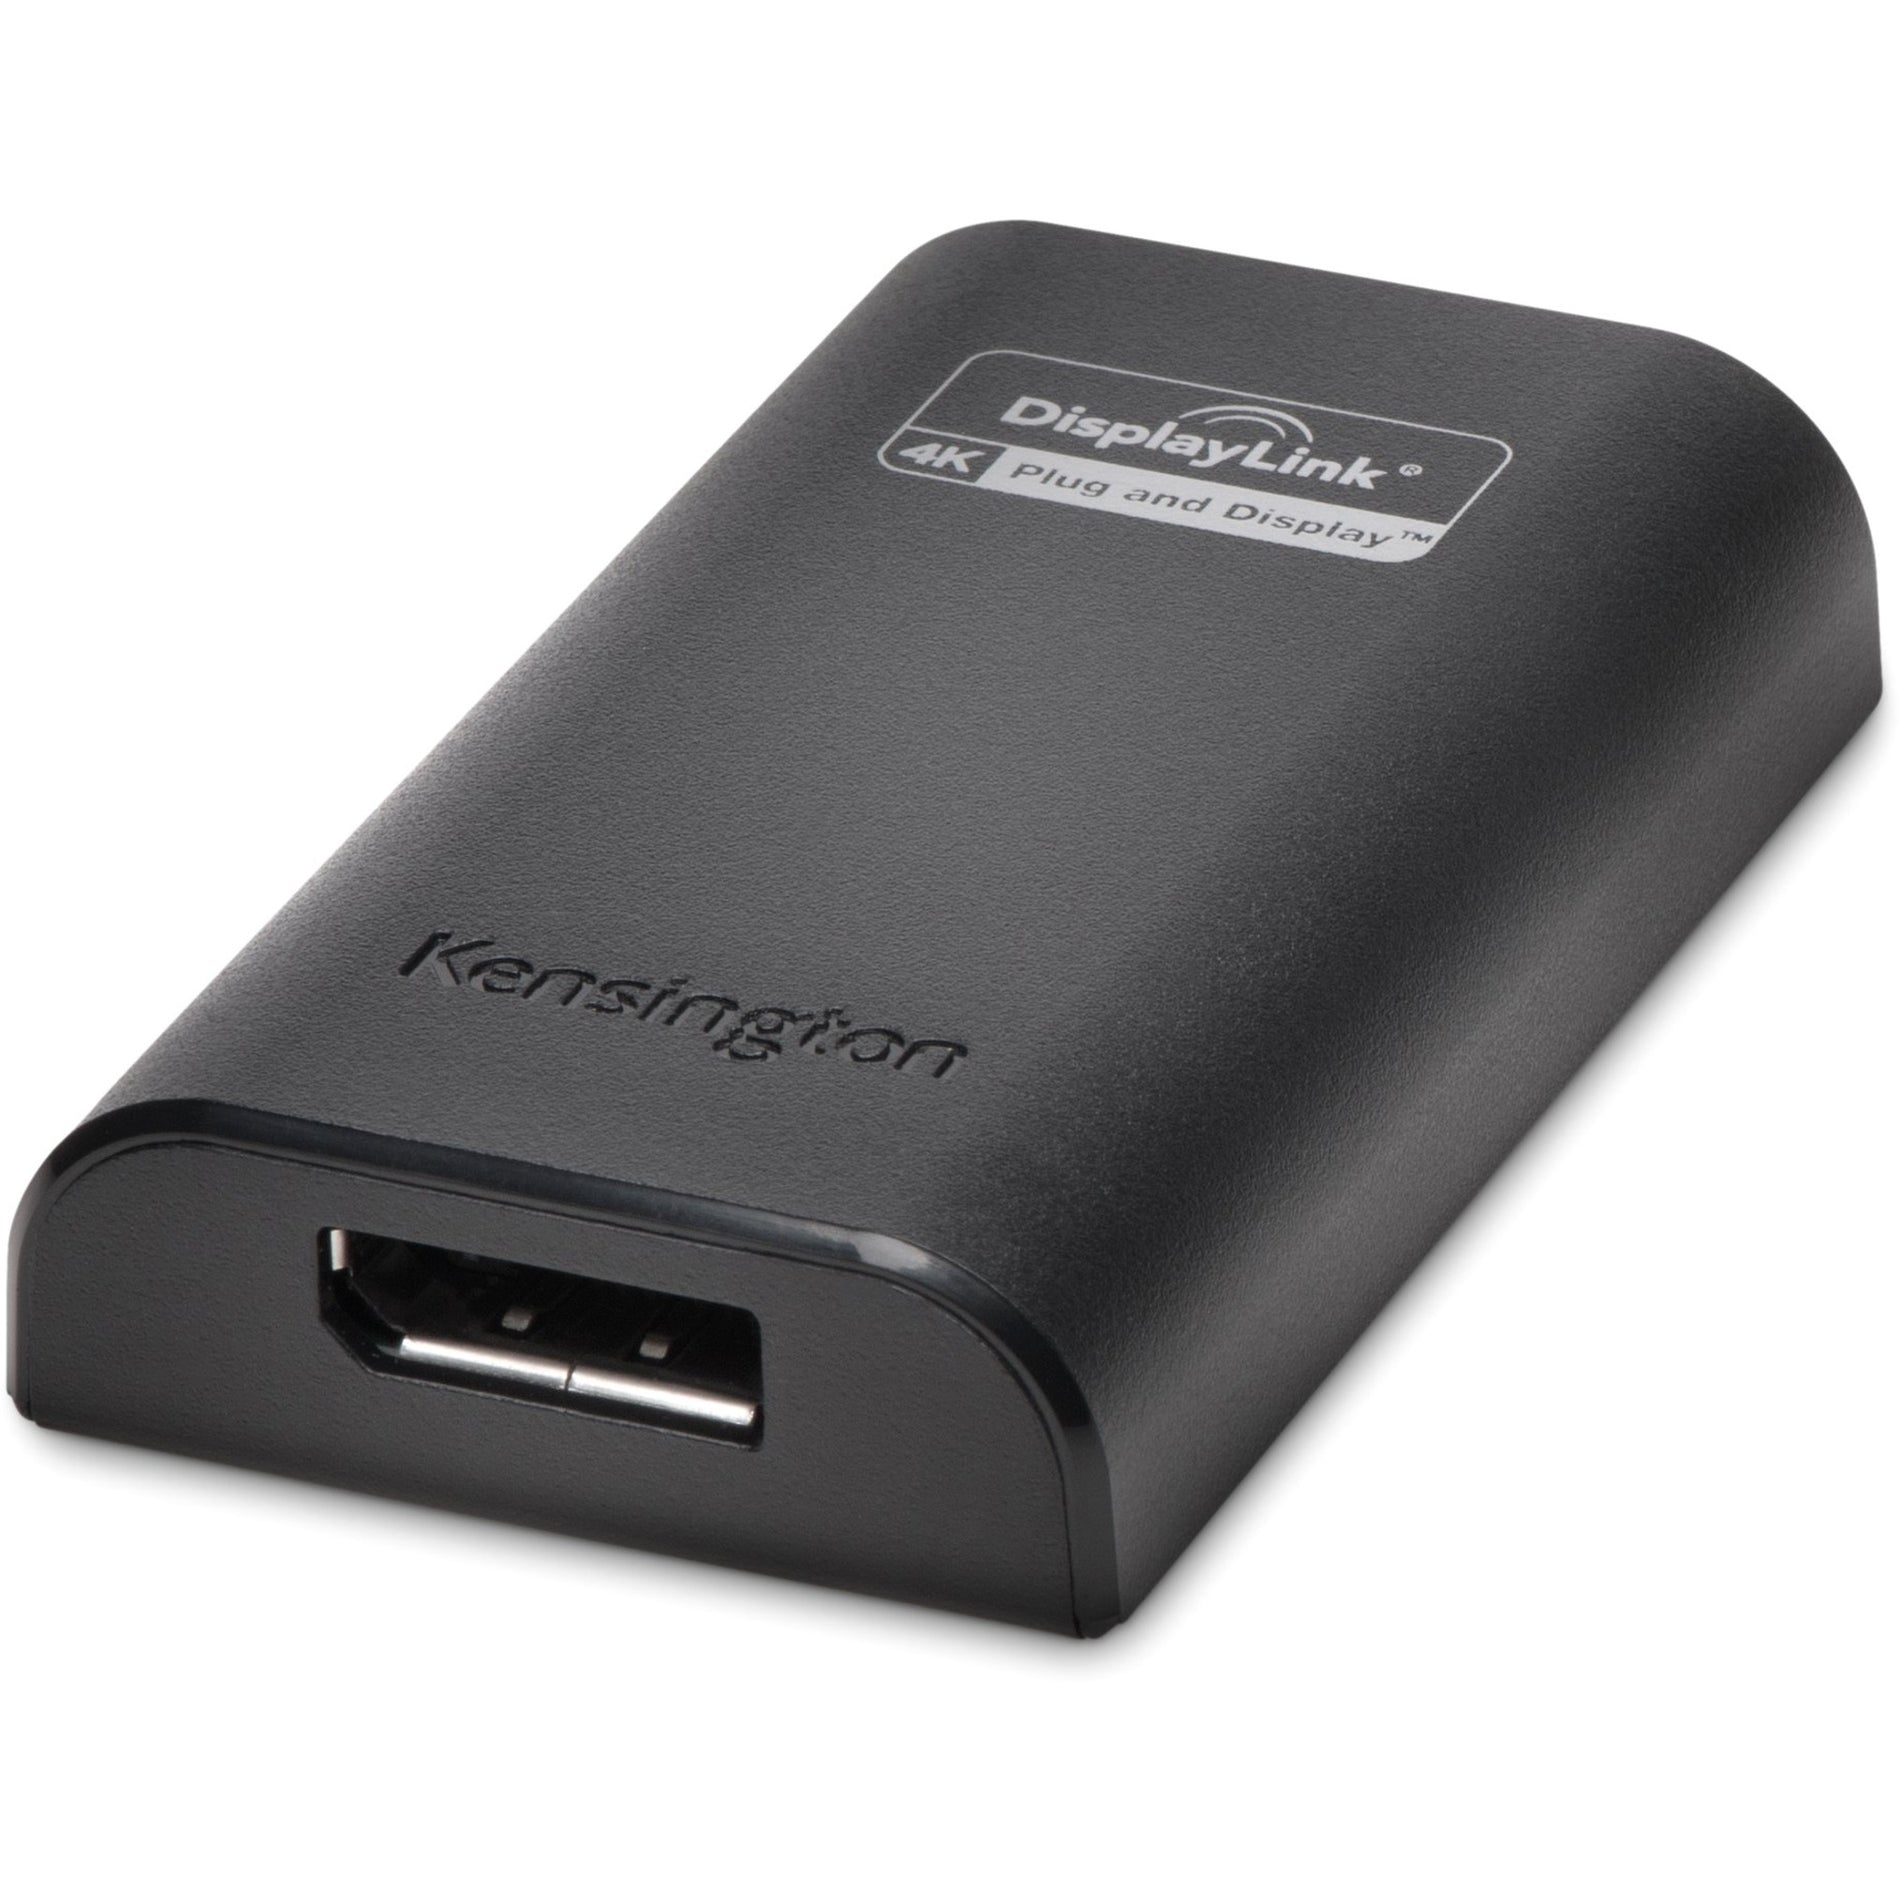 Kensington K33989WW VU4000D USB 3.0 to DisplayPort 4K Video Adapter, Plug and Play, 2-Year Warranty